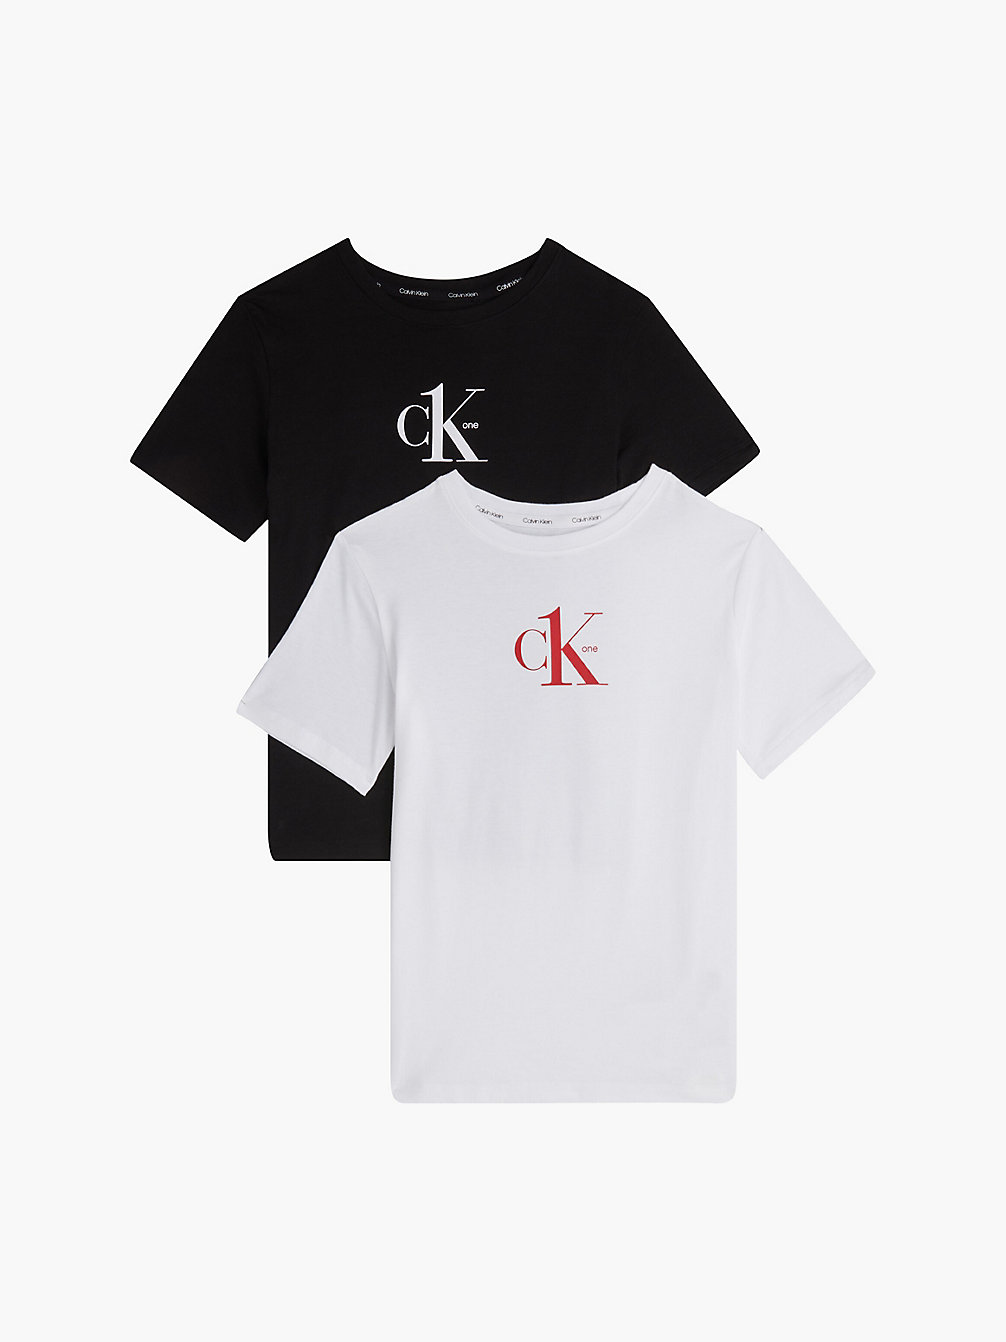 PVHBLACK/PVHWHITE 2er-Pack Unisex T-Shirts – CK One undefined kids unisex Calvin Klein